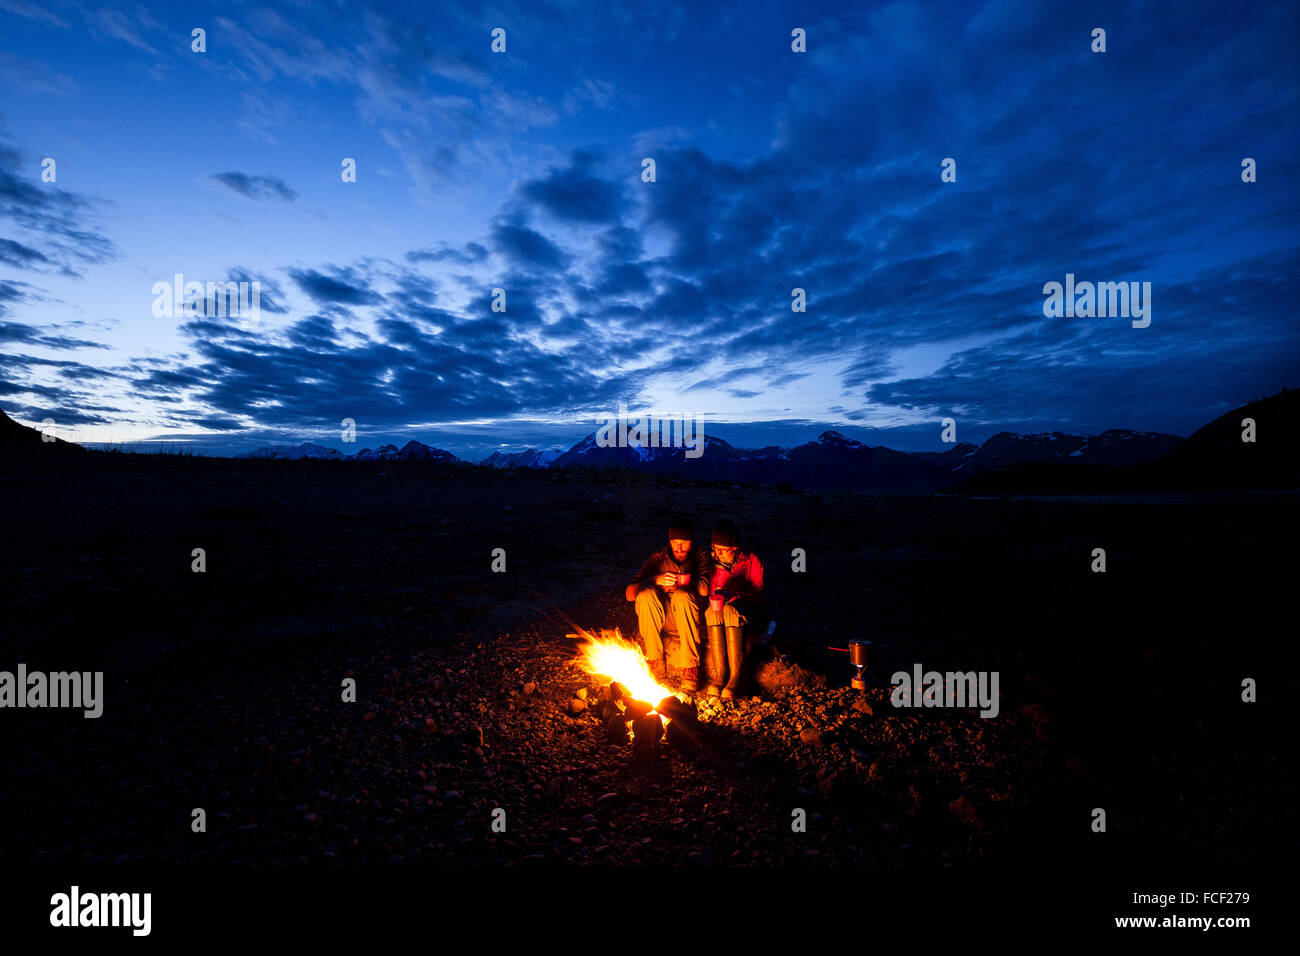 Two campers huddle together at a campfire in Glacier Bay National Park, Alaska. Stock Photo